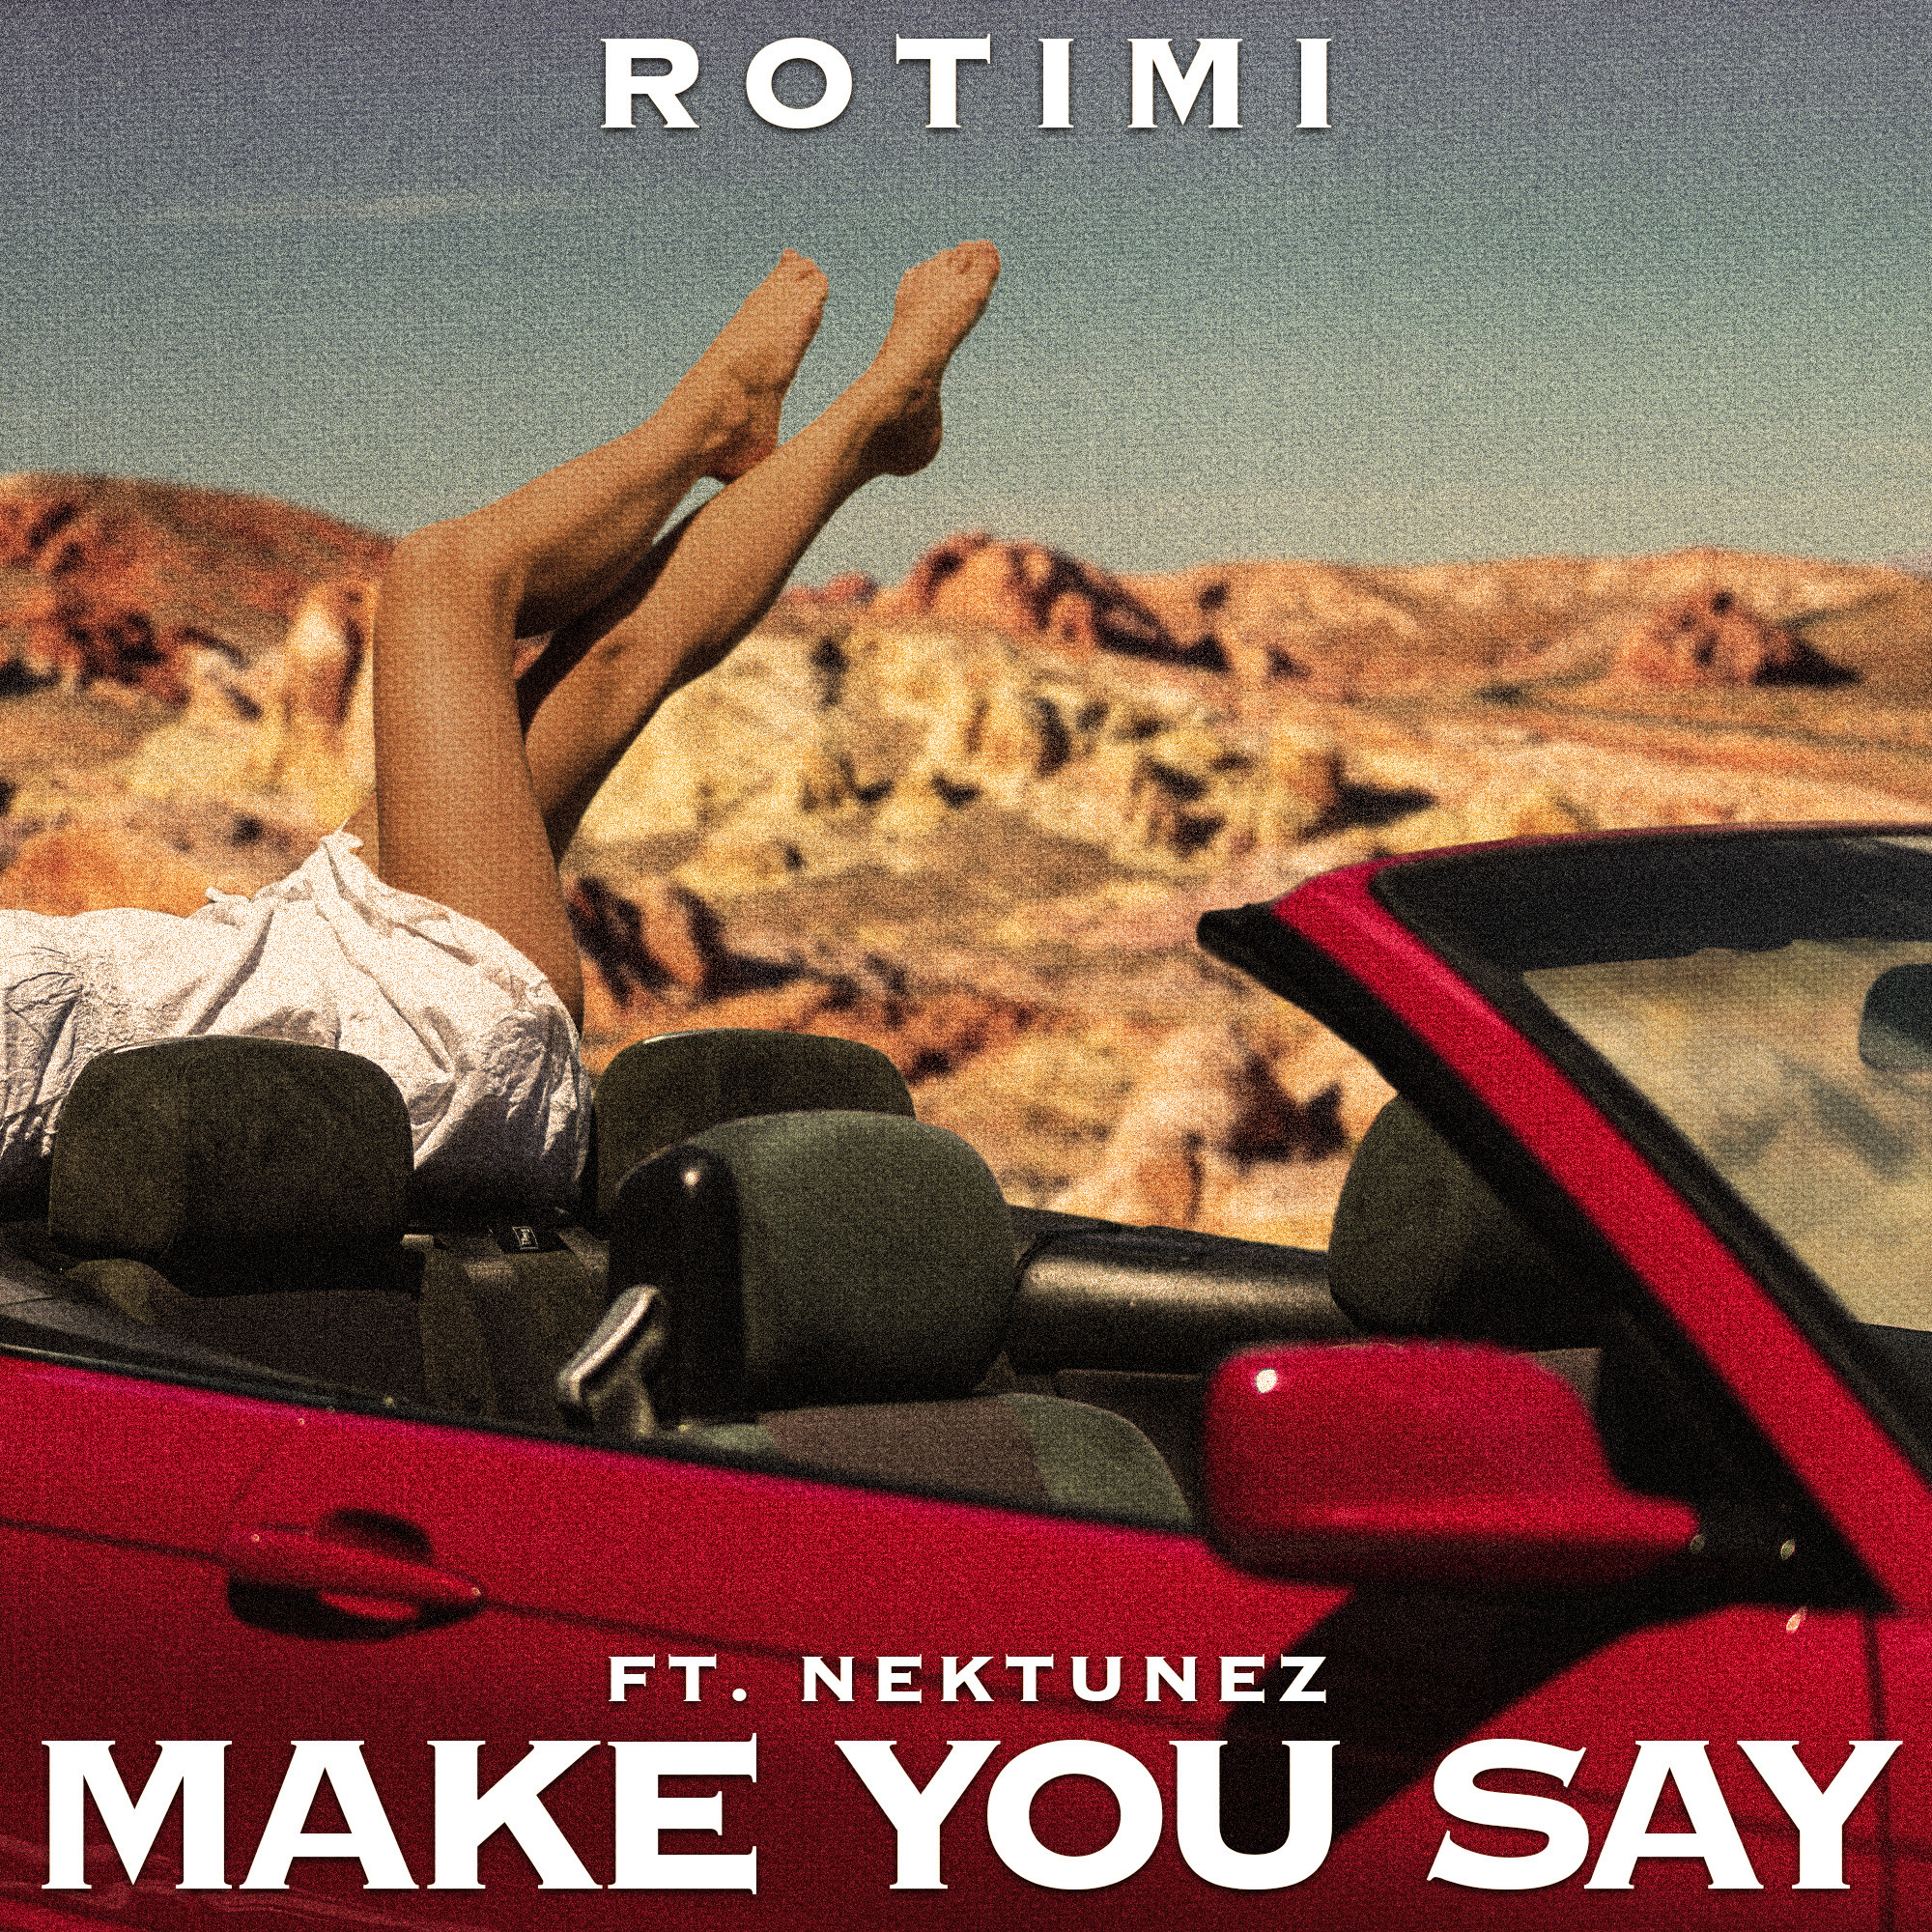 Rotimi’s new single, video “Make You Say” boasts Afrobeats vibe